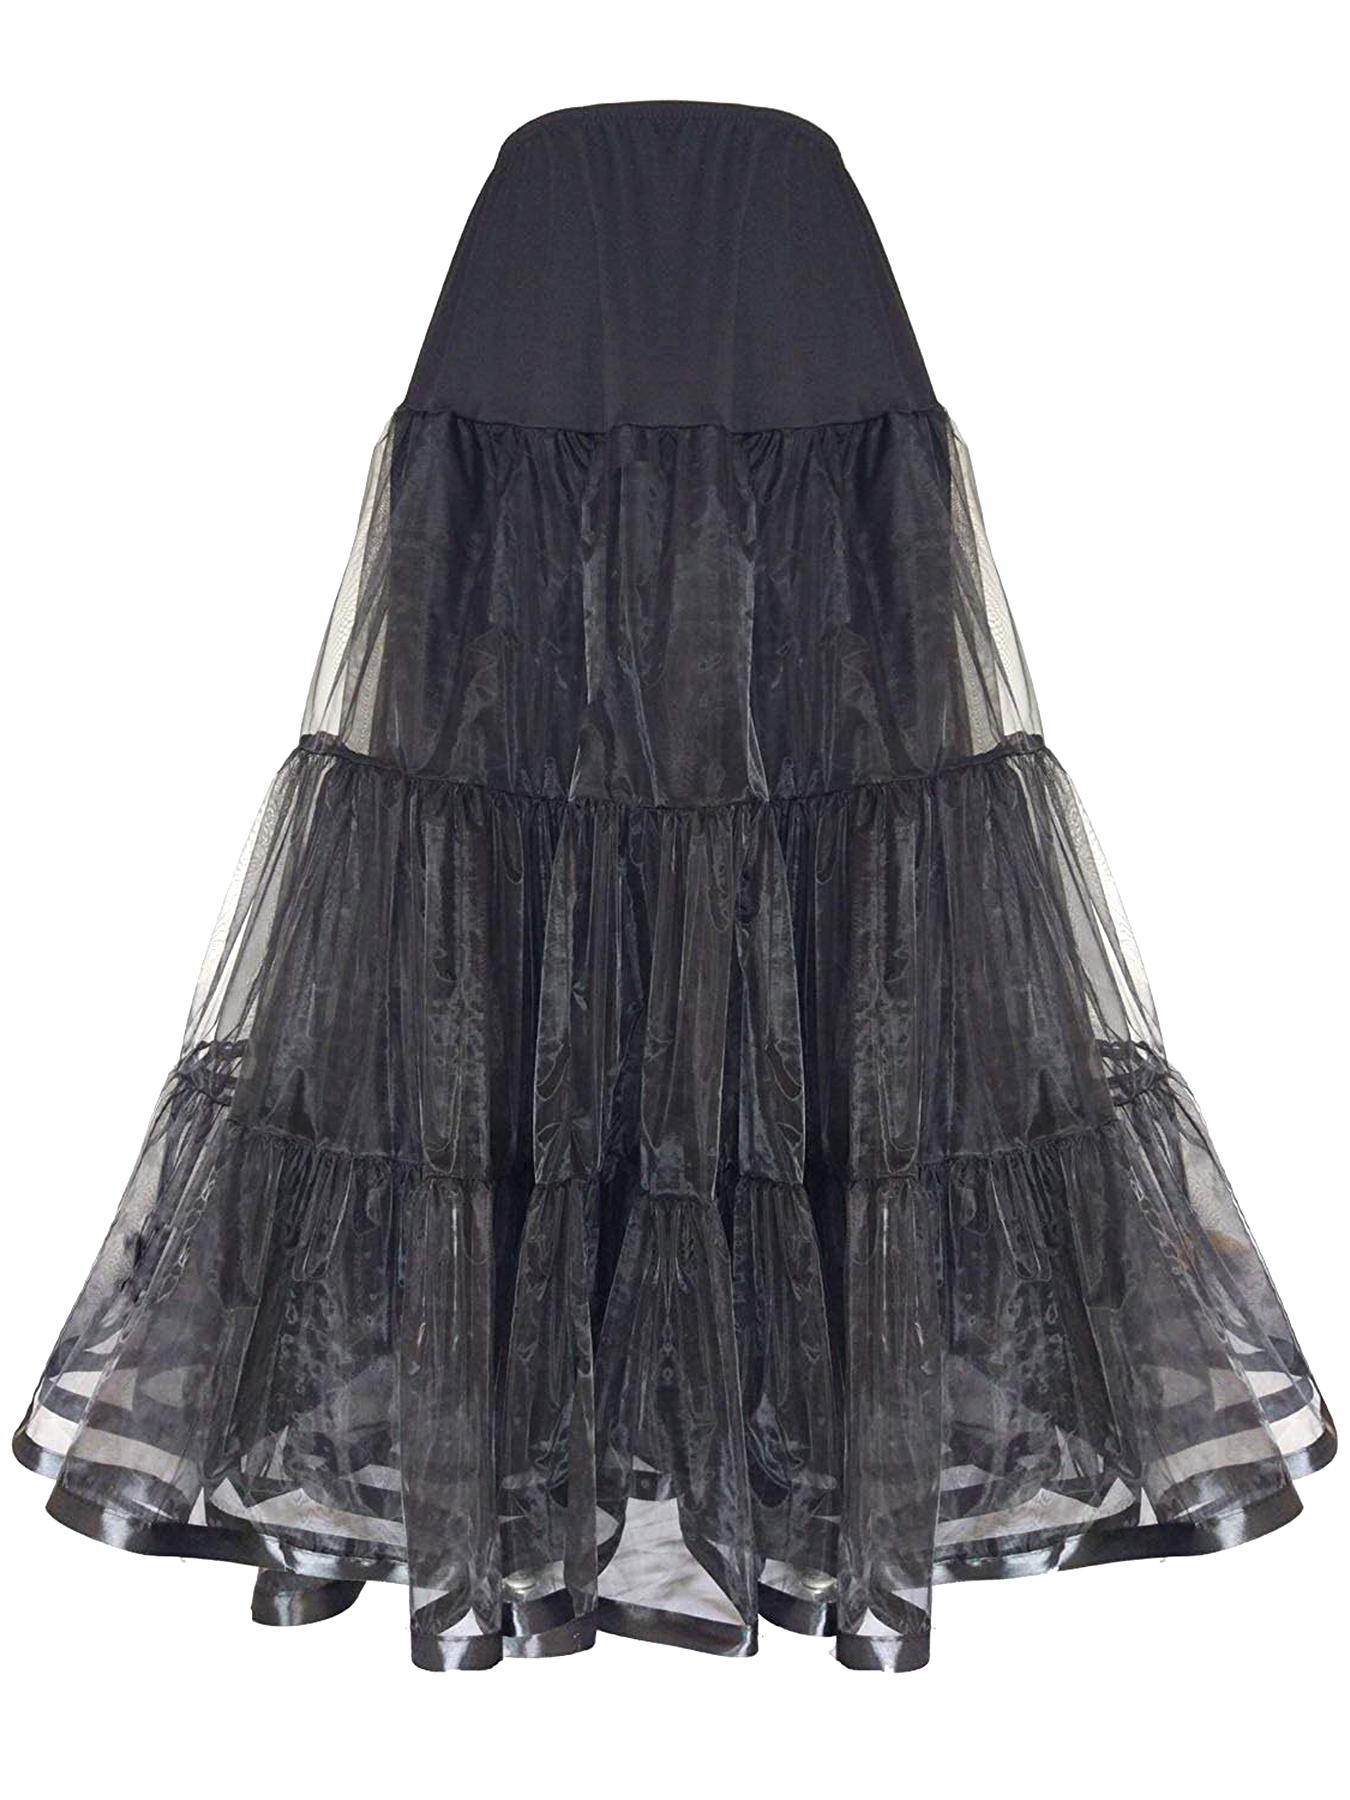 Long Black Petticoat for sale in UK | 50 used Long Black Petticoats